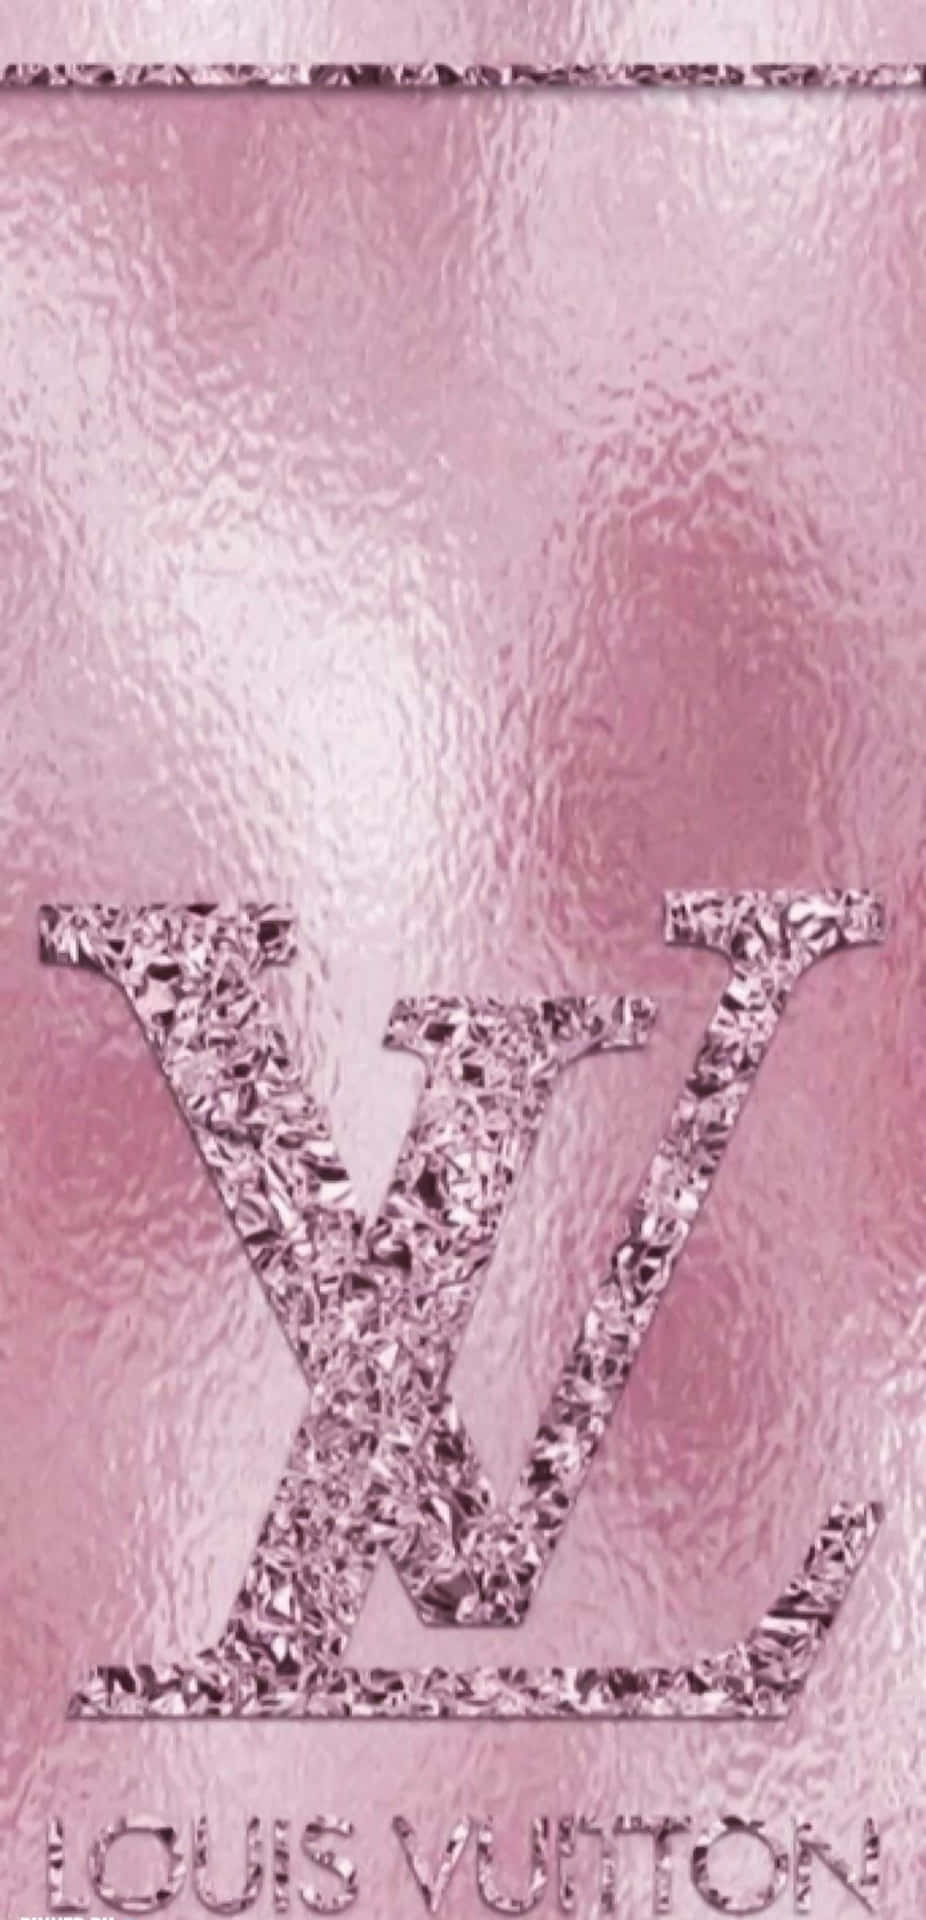 Download IMAGE Louis Vuitton Pink- Handbag Bliss Wallpaper